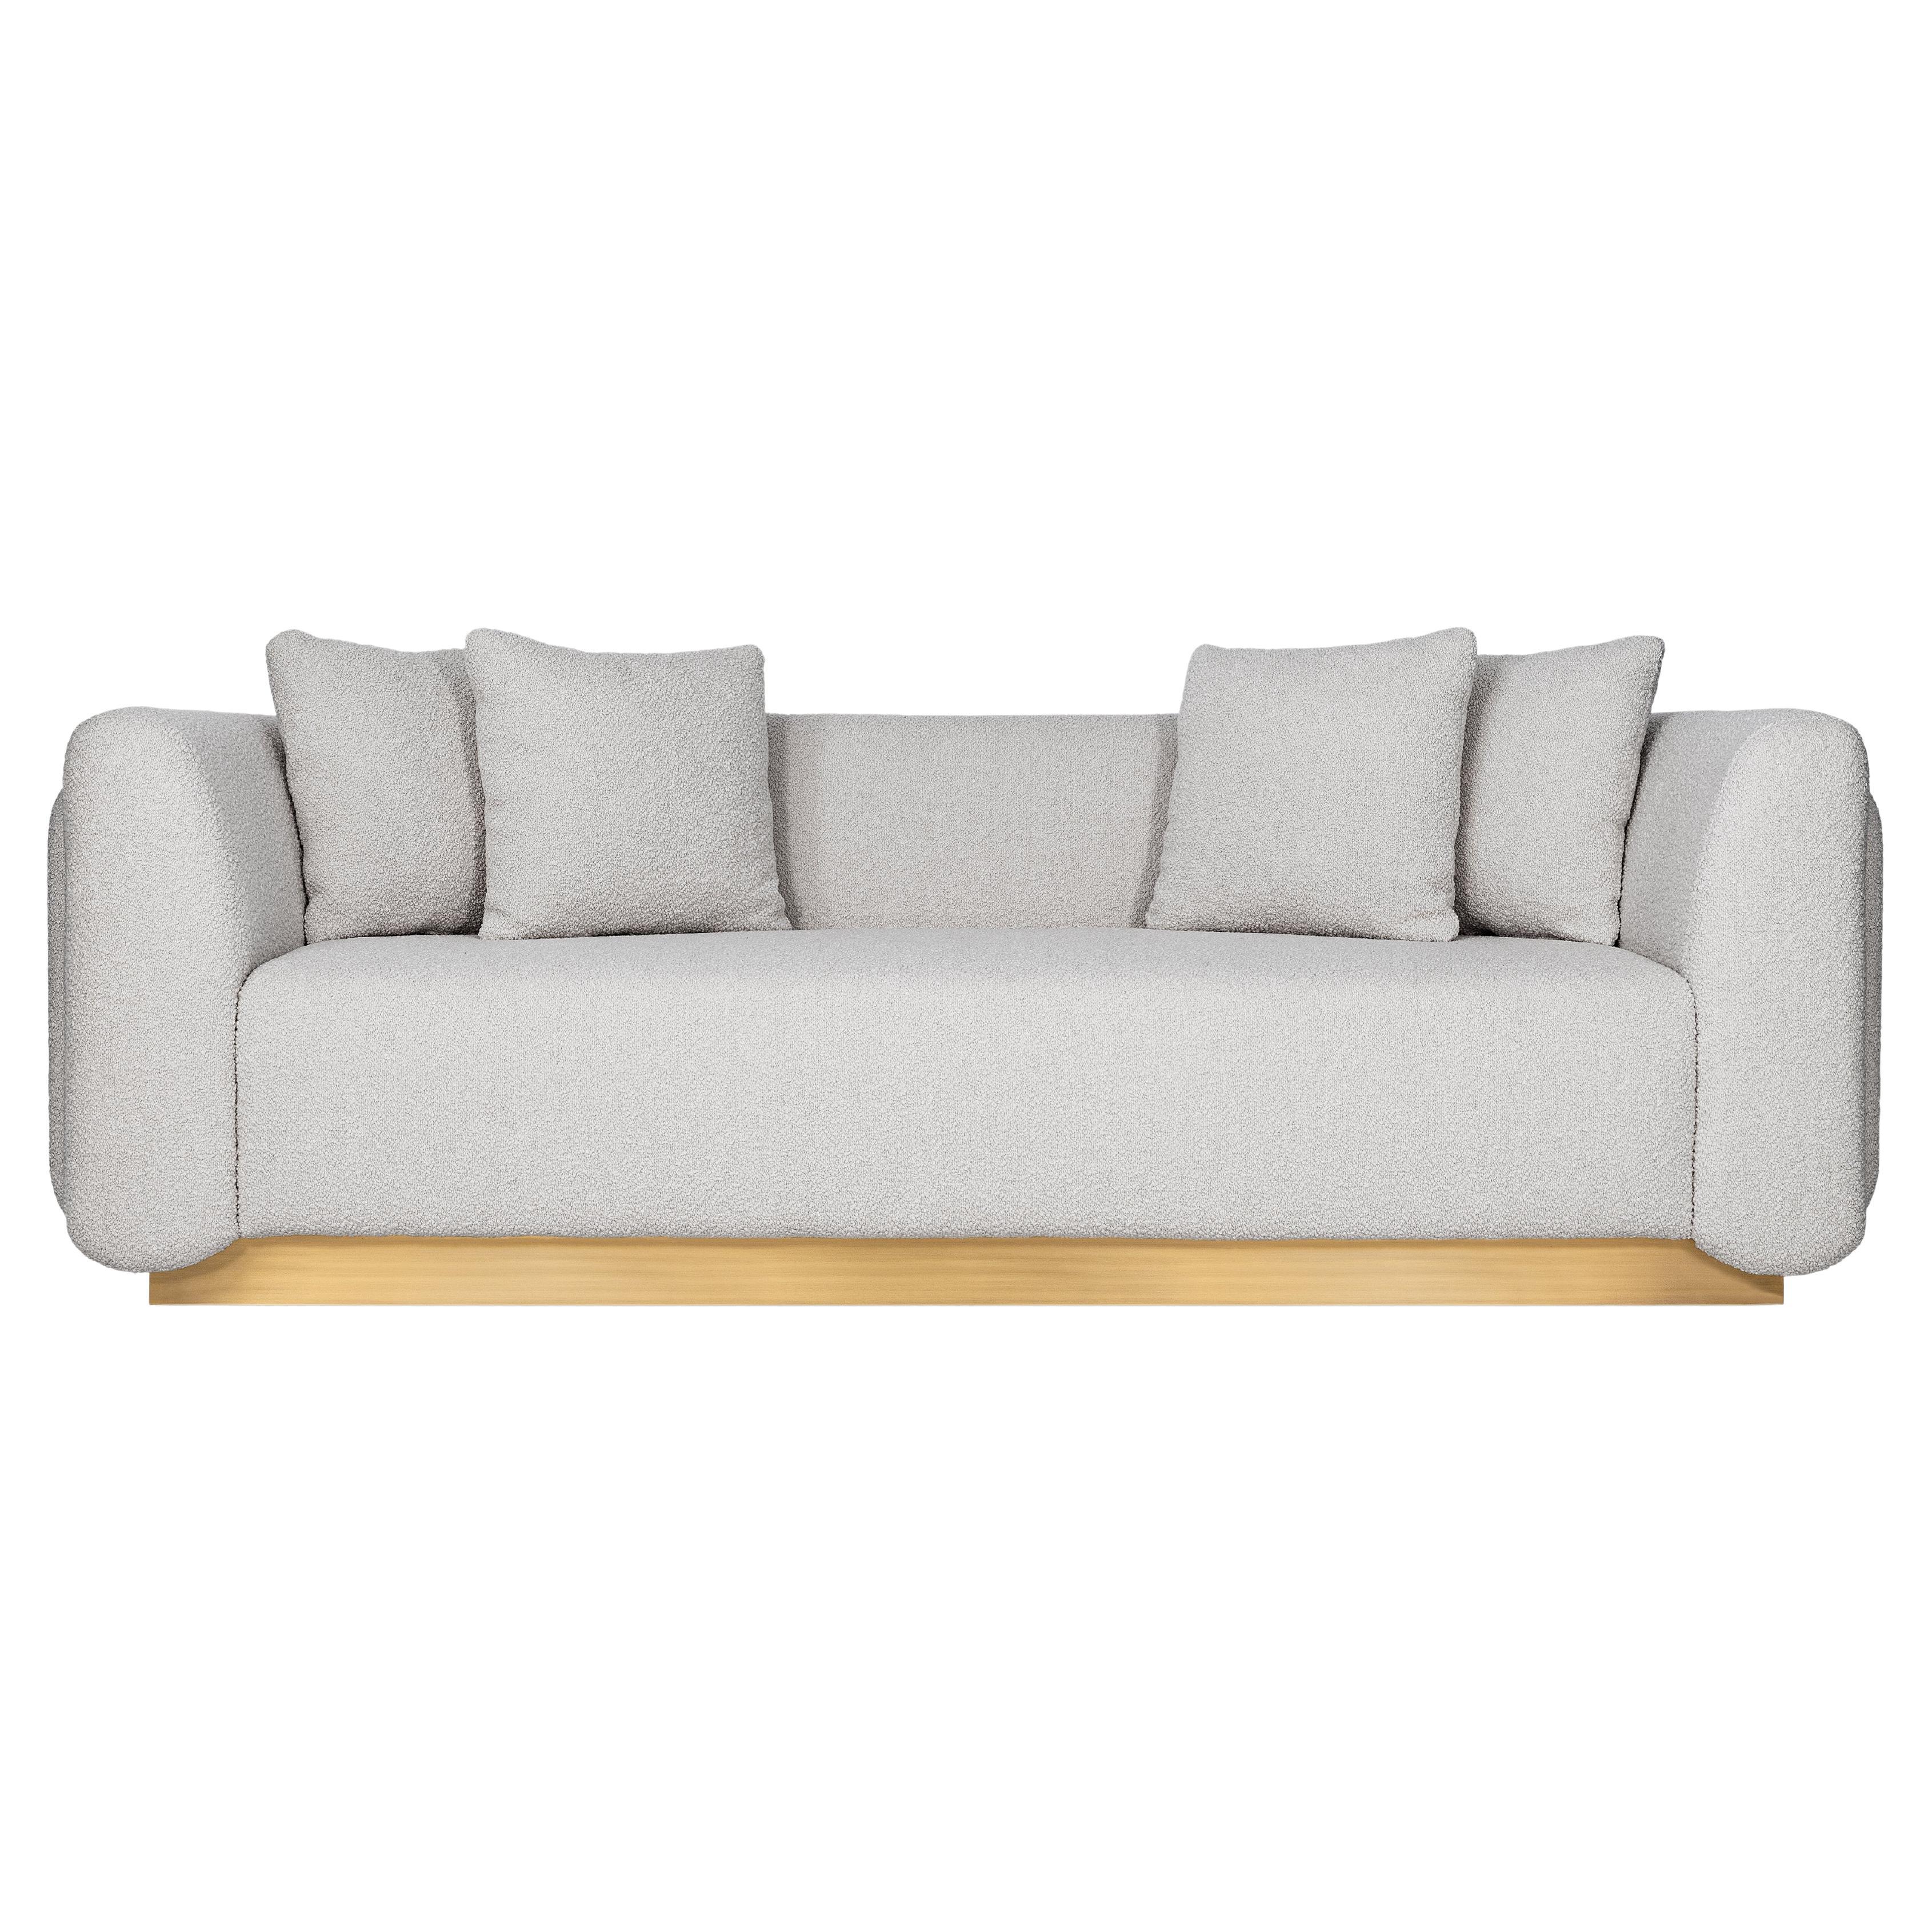 Foz 3 Seat Sofa, Woollen & Brass, InsidherLand by Joana Santos Barbosa